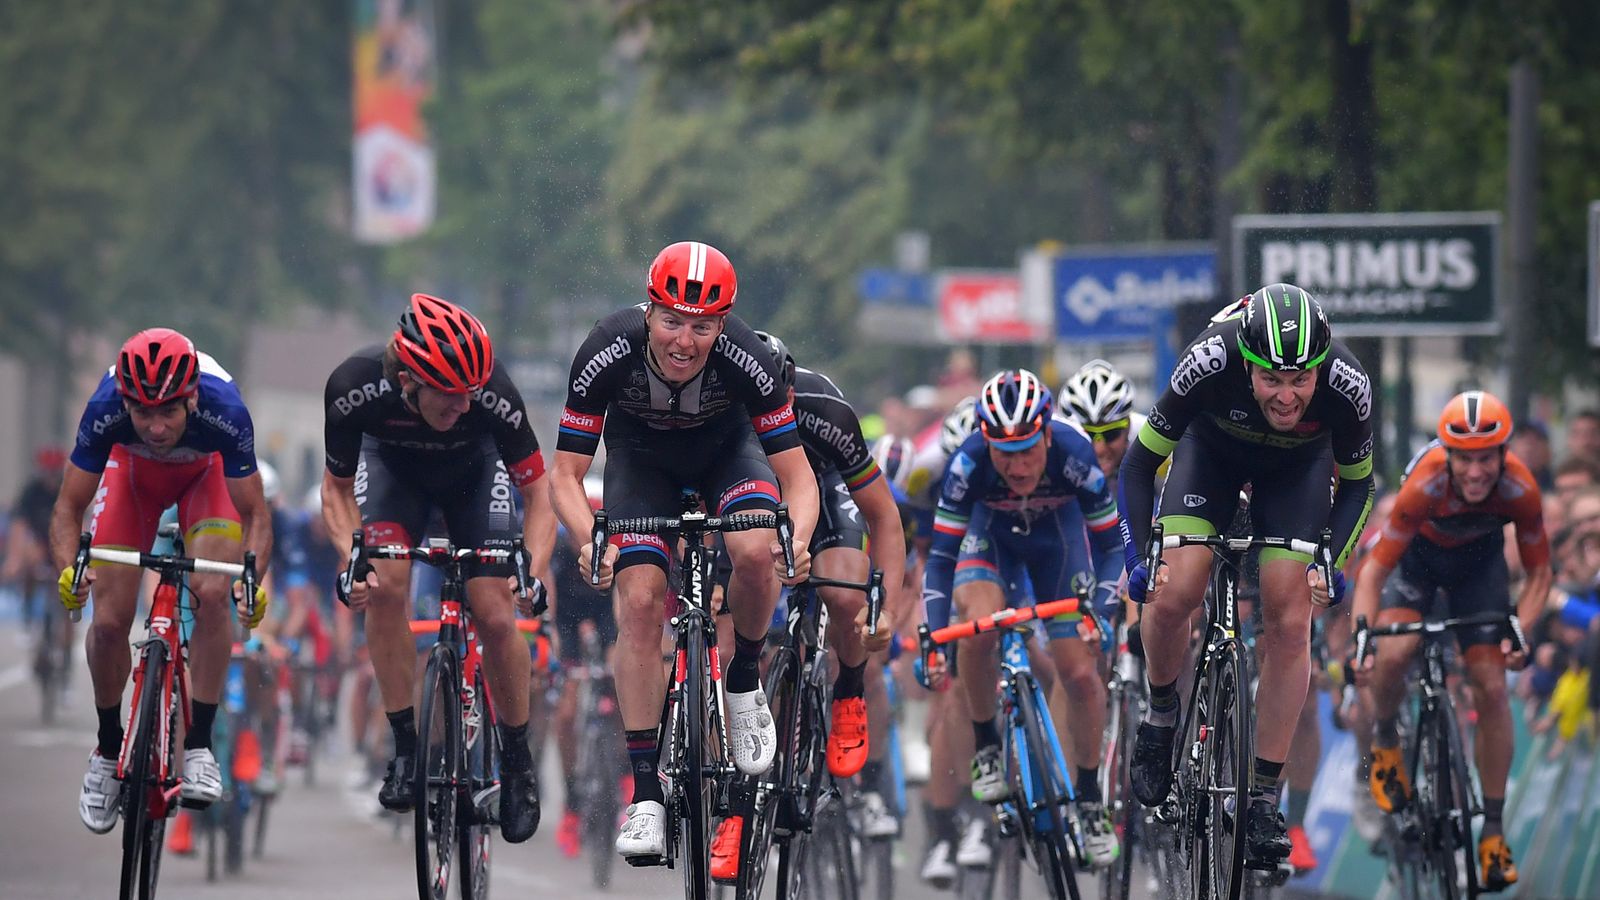 Tour of Belgium riders protest after crash puts Stig Broeckx in coma